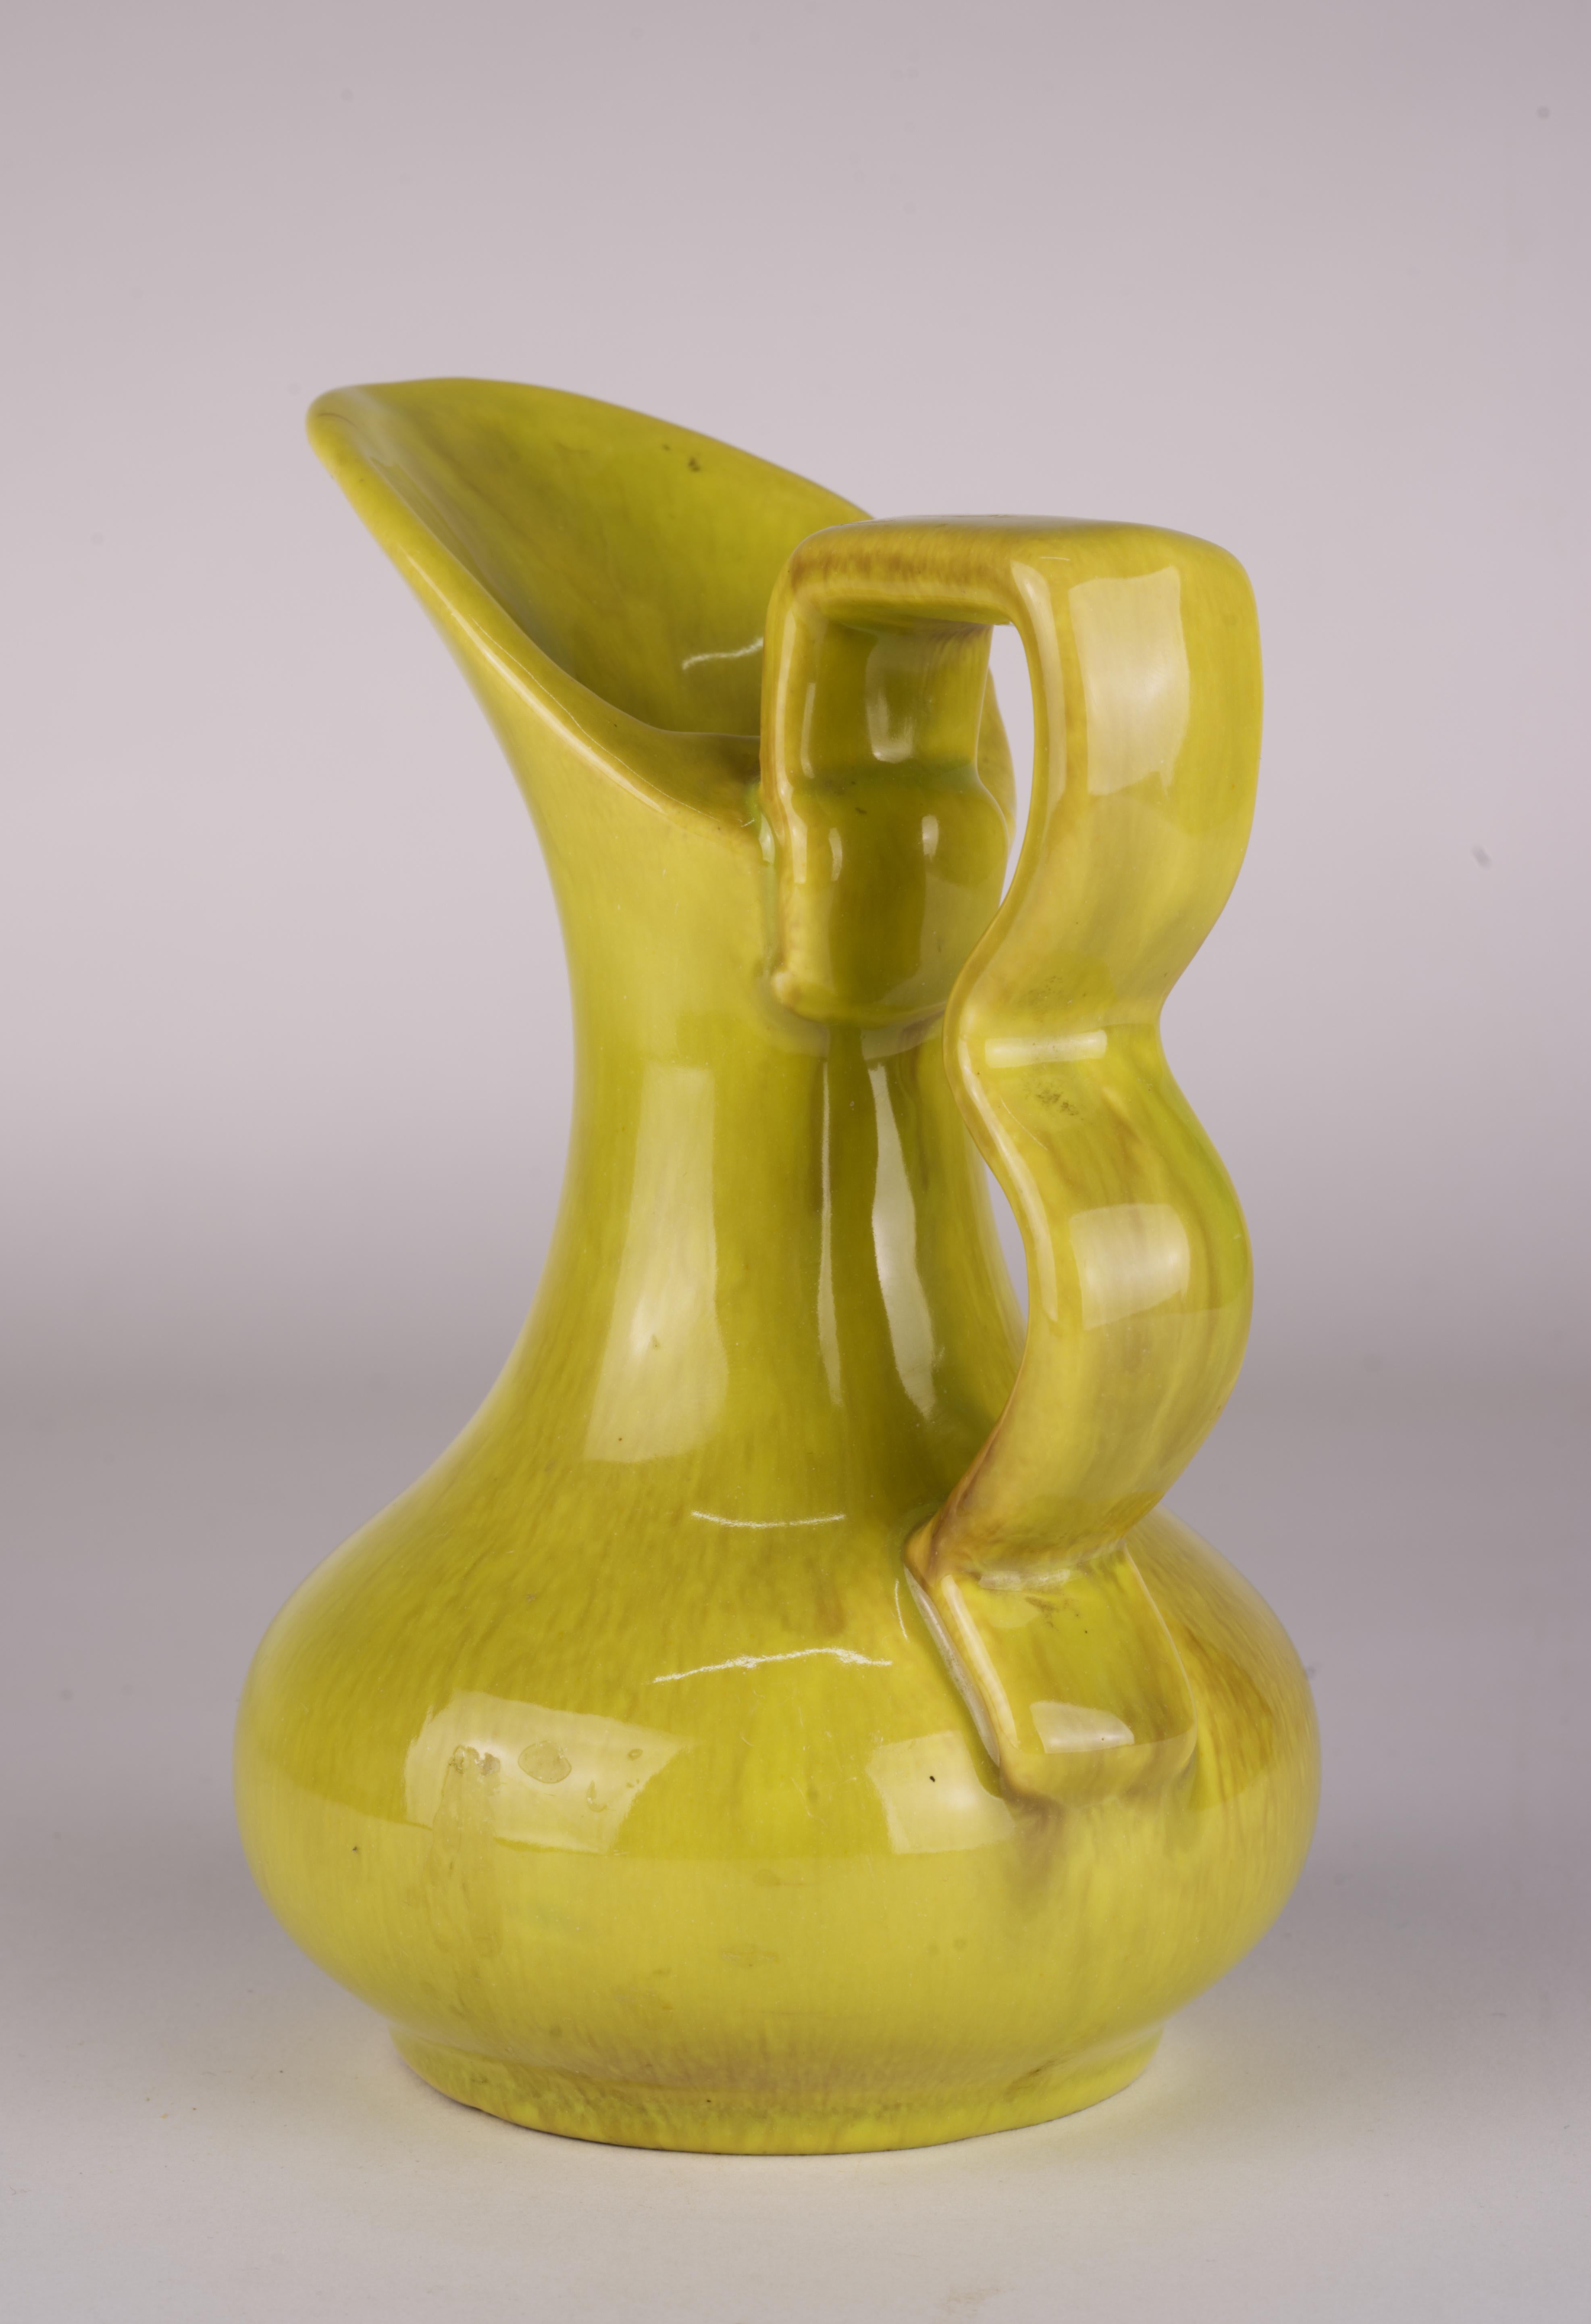 Ceramic Gonder Pottery Bud Vase Ewer in Chartreuse Drip Glaze 1940s-1950s For Sale